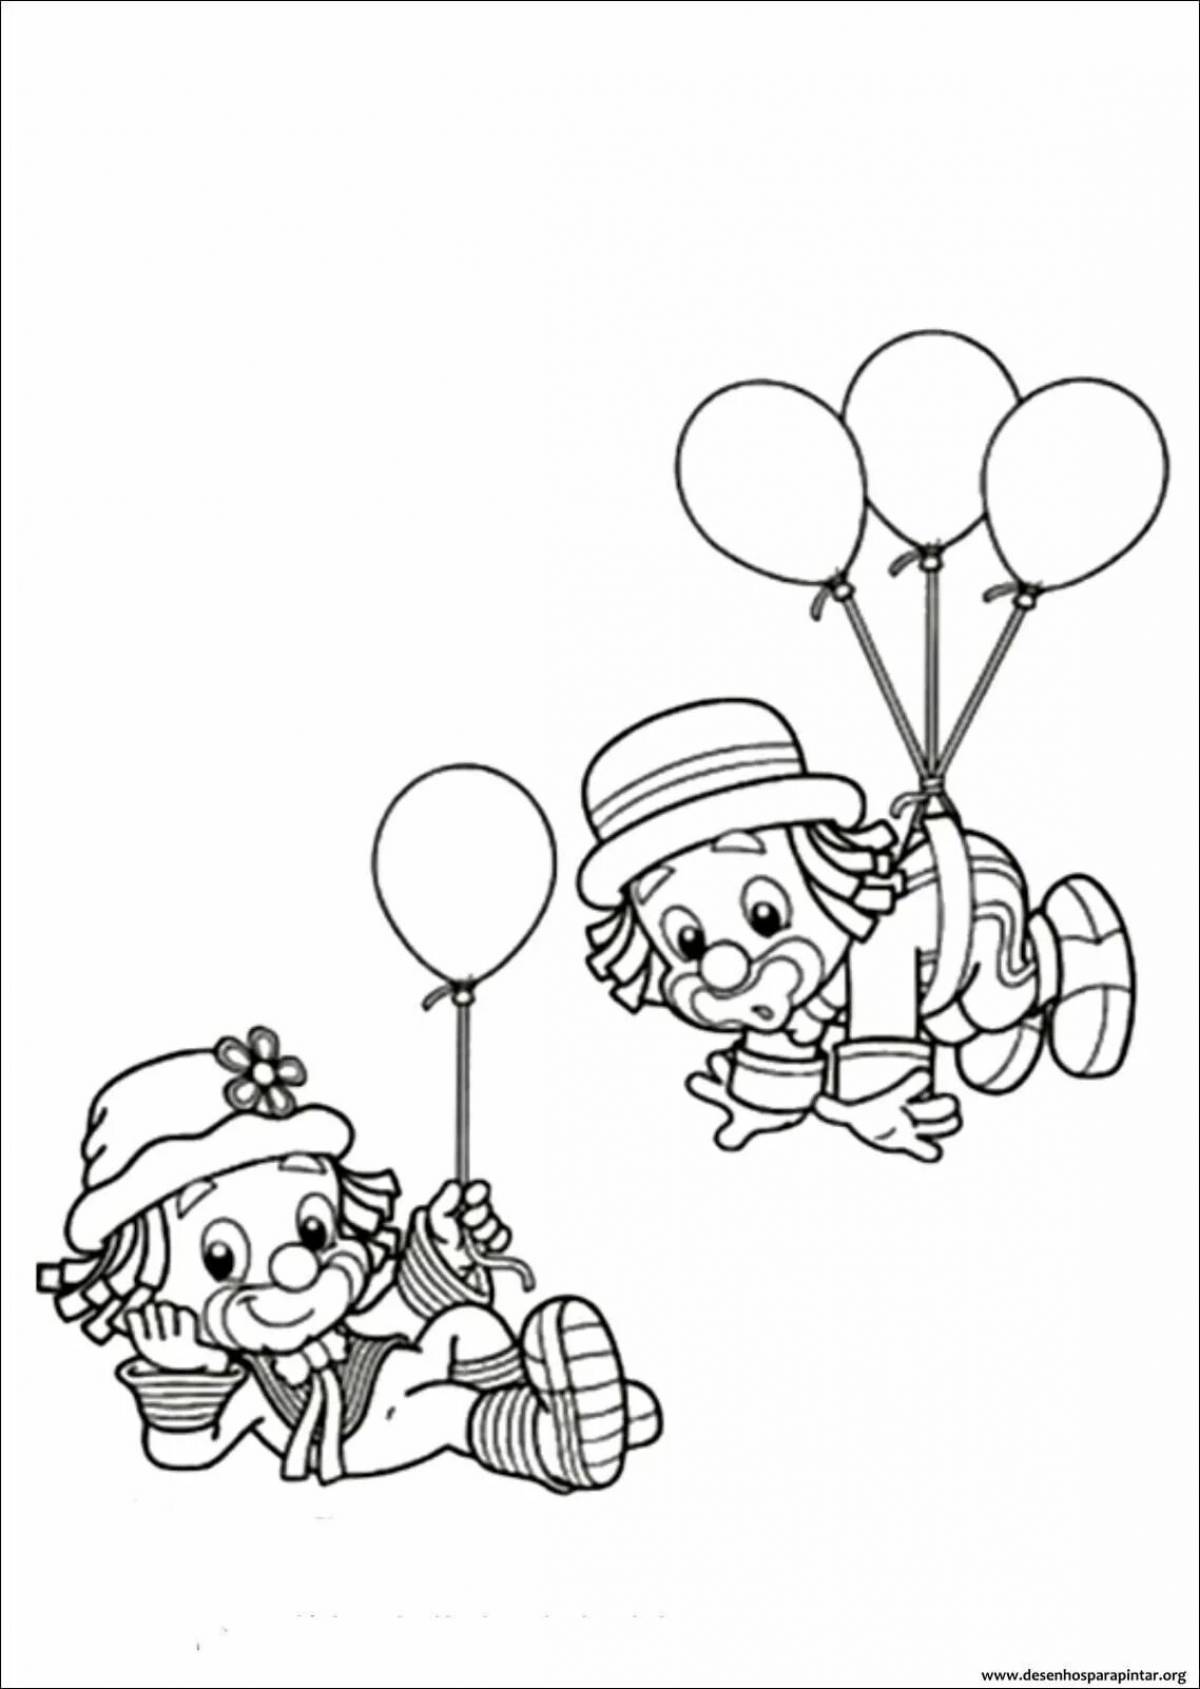 Balloon clown #7